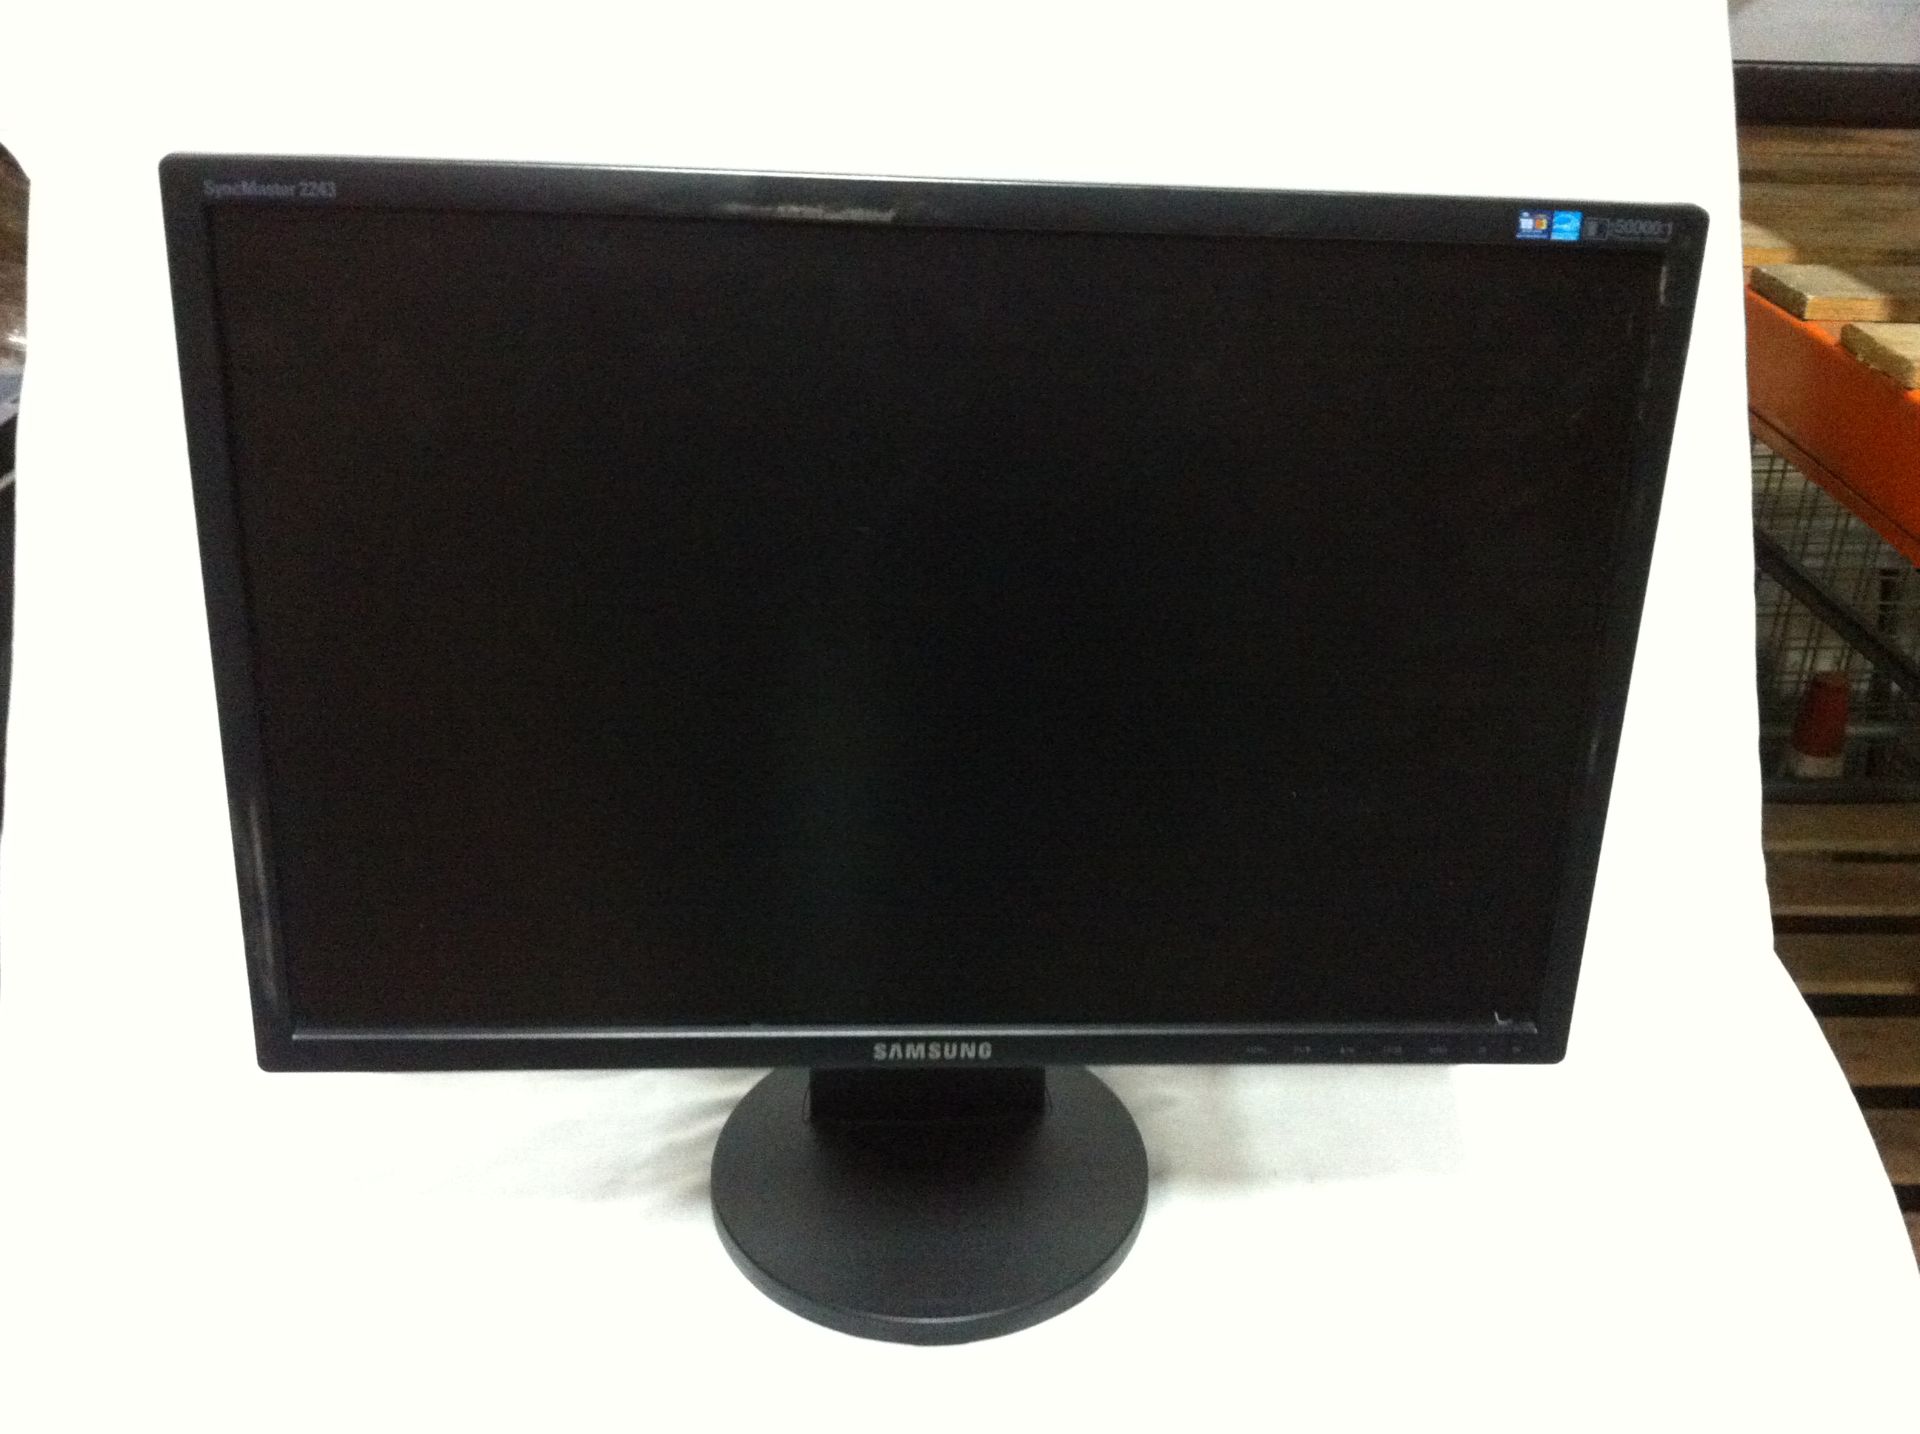 8x Dell/Samsung Computer Monitors. - Image 2 of 2